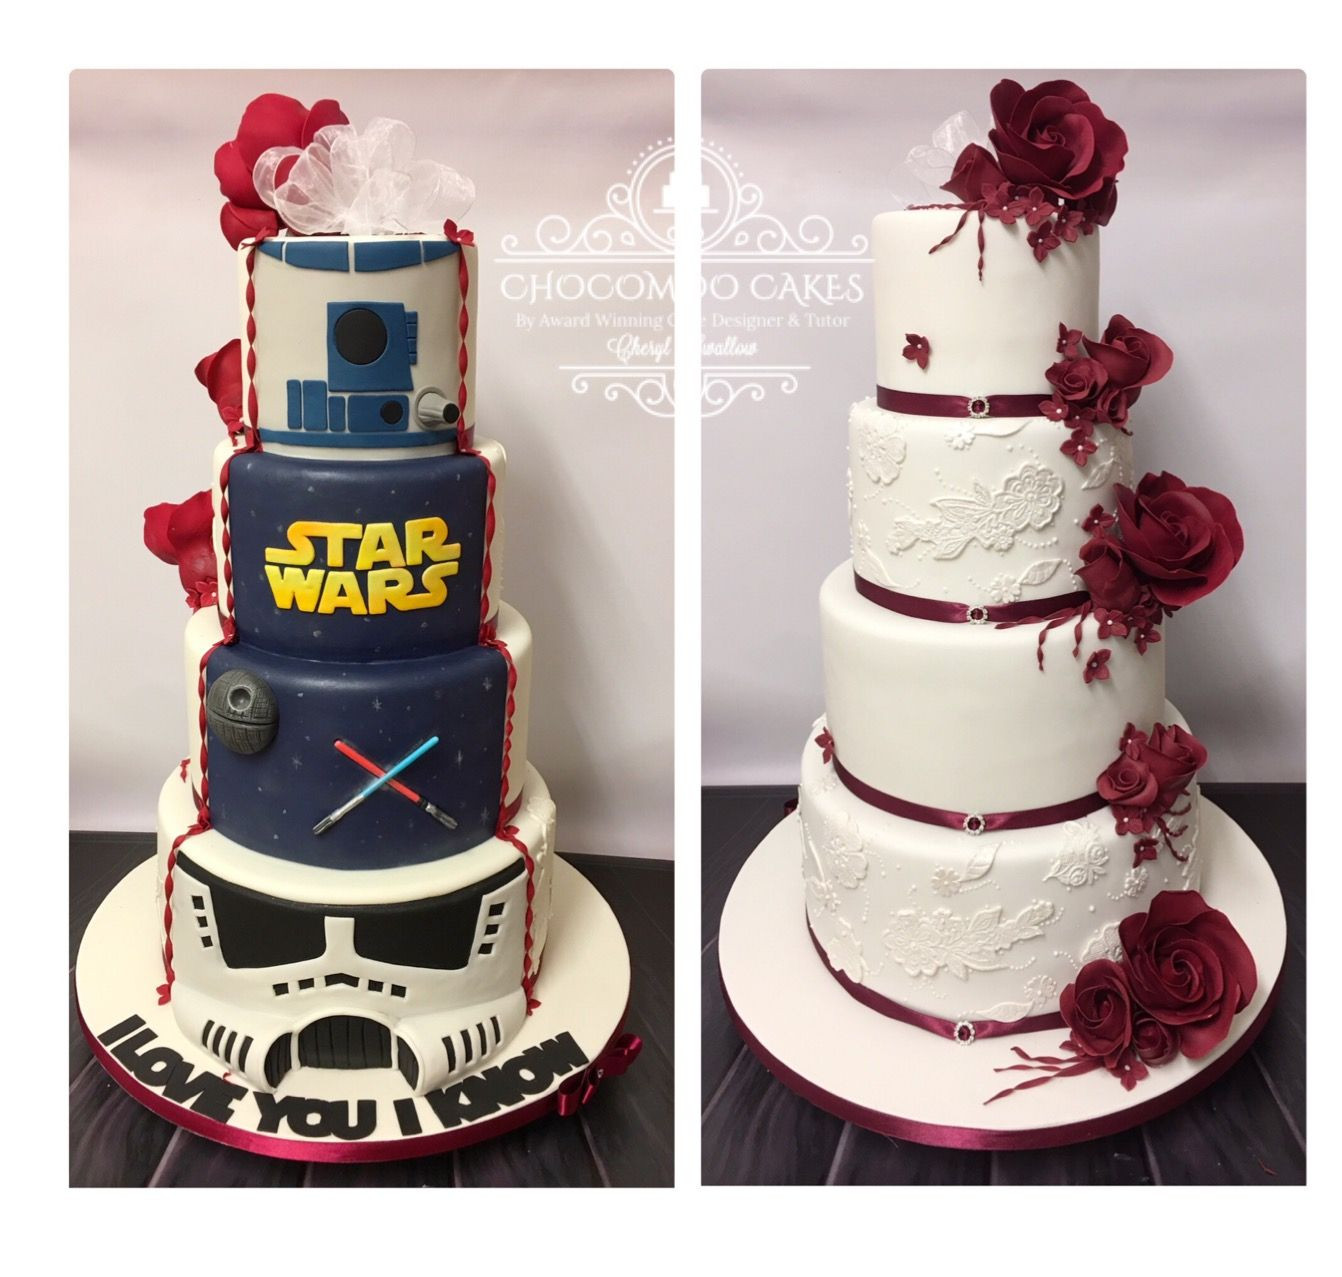 Star Wars Wedding Cakes
 Half wedding cake half Star Wars